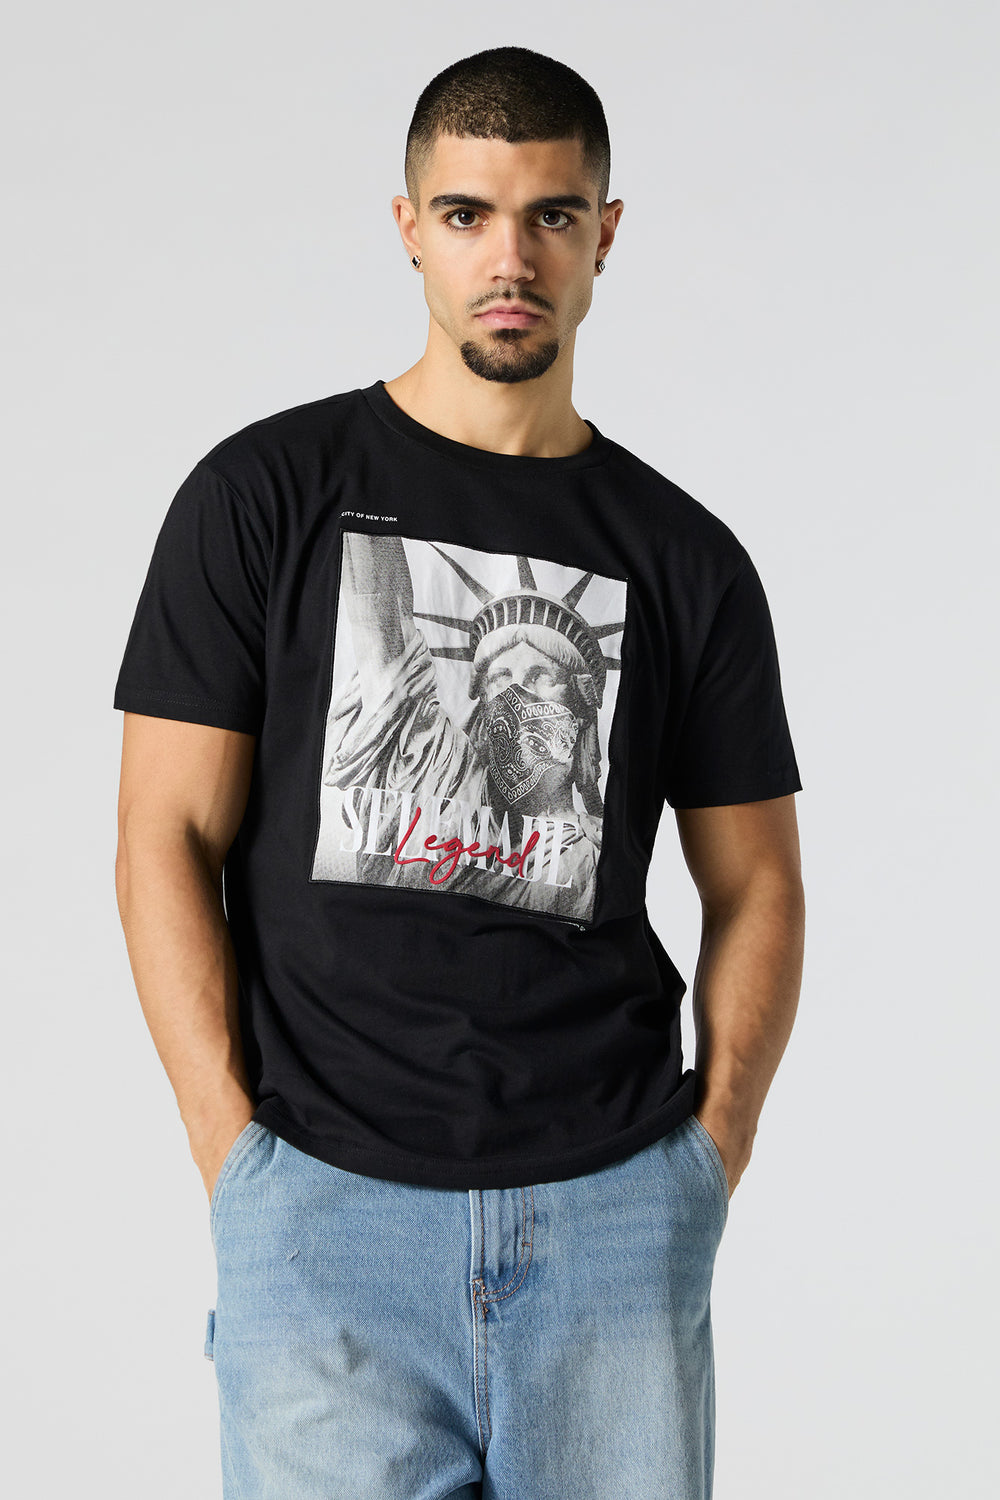 Black Self Made Legend Graphic T-Shirt Black Self Made Legend Graphic T-Shirt 2